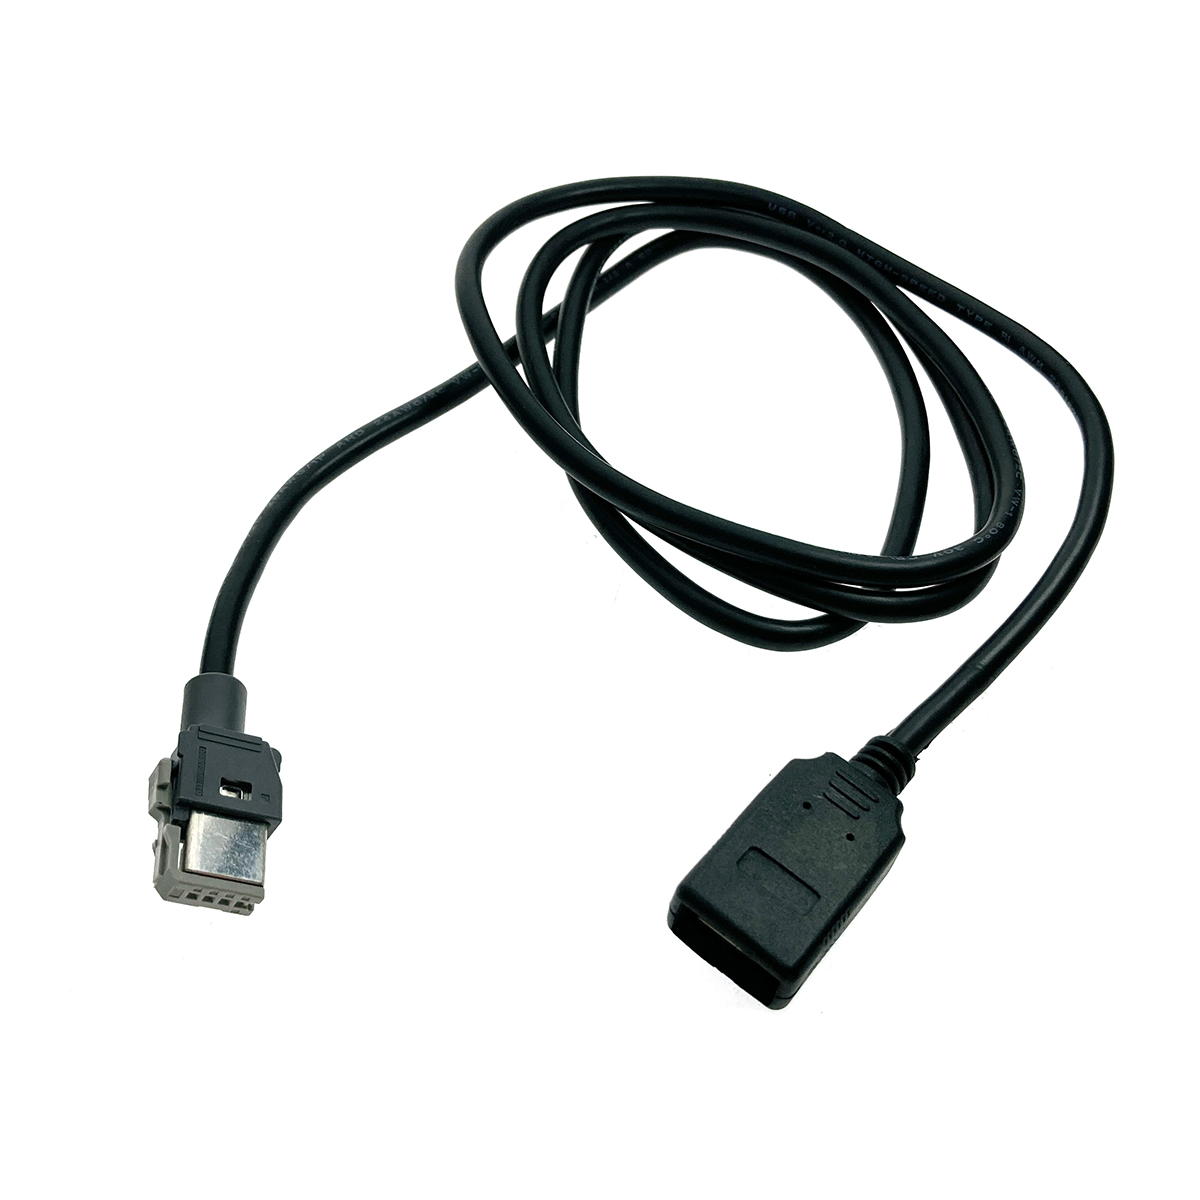 Аудио кабель AUX to USB A Female 90см, для Peugeot, Citroen, AUX41863